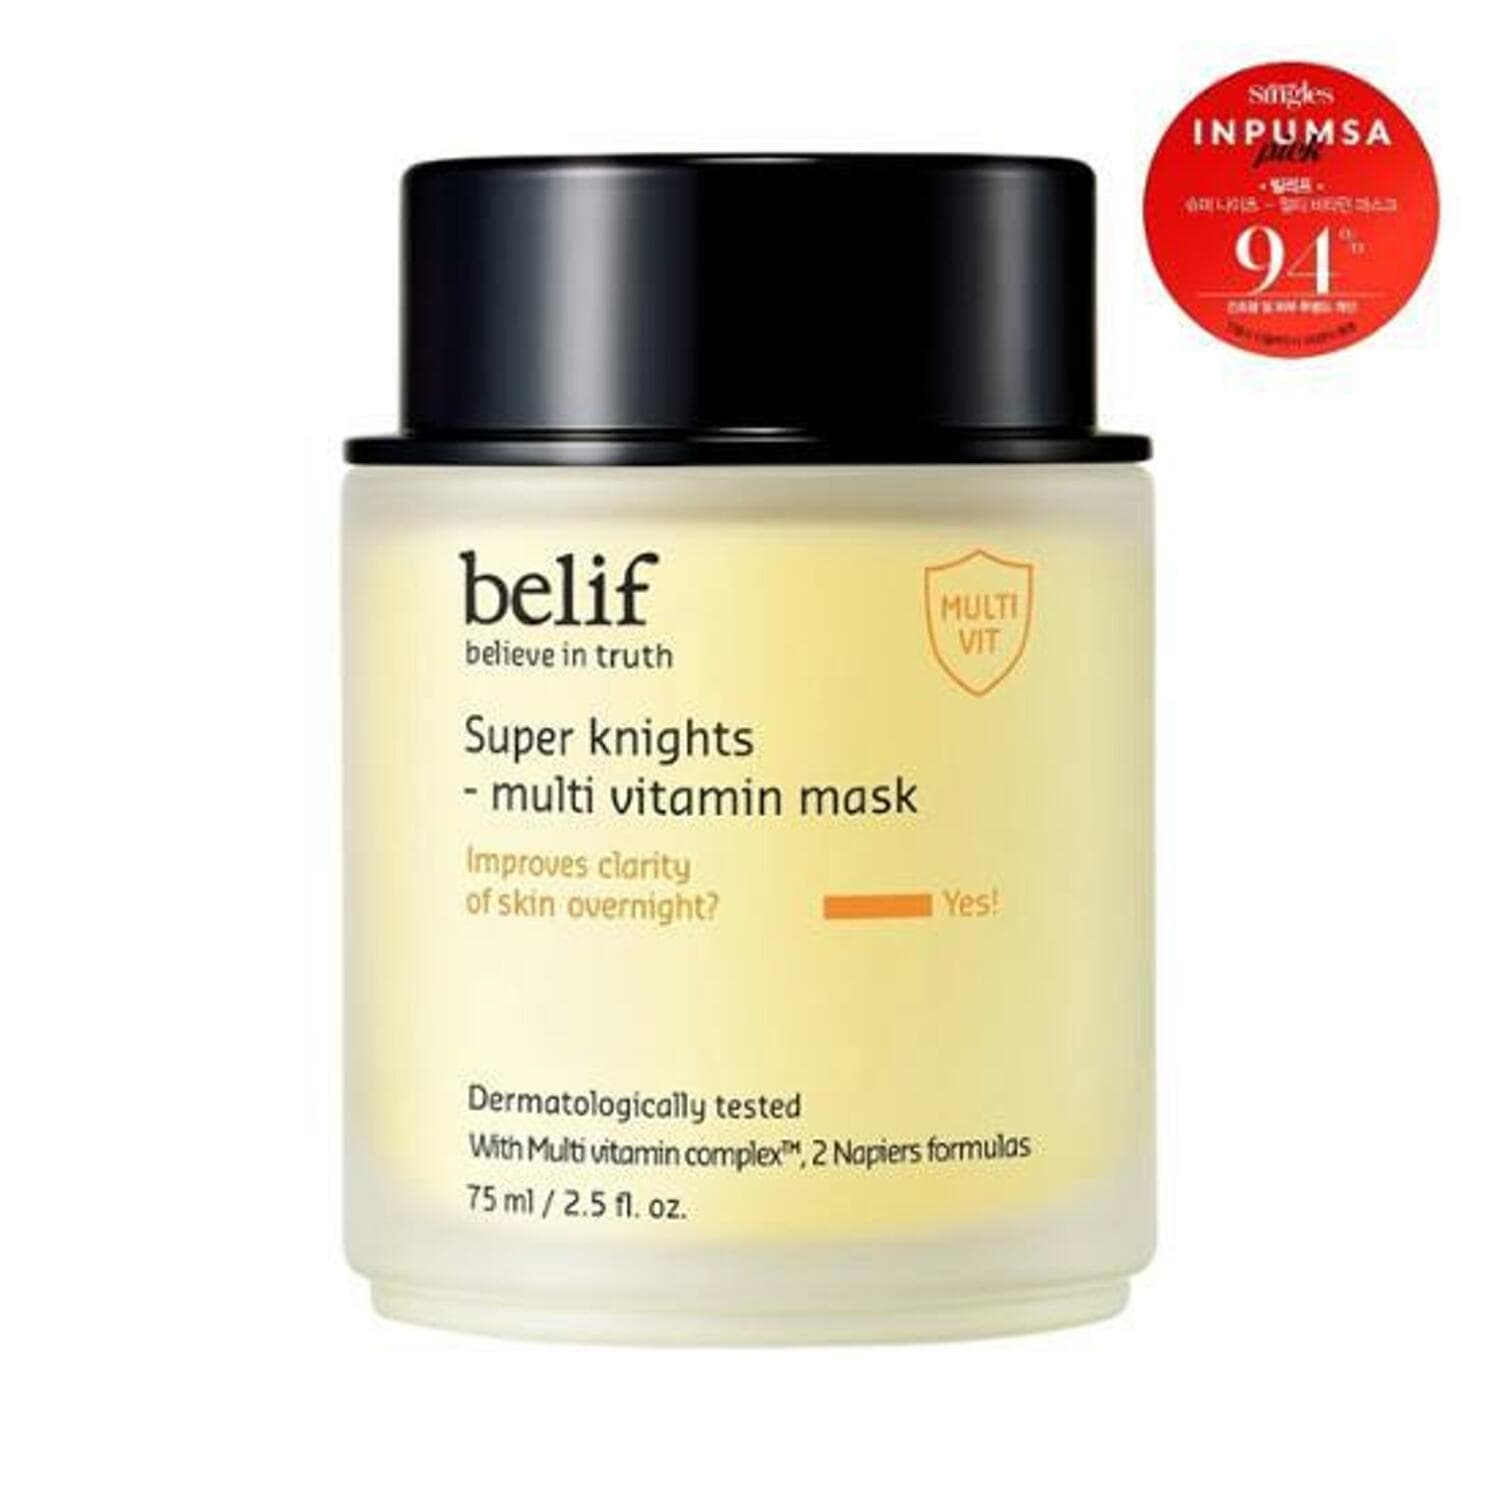 belif Super Knights Multi Vitamin Mask 75mL